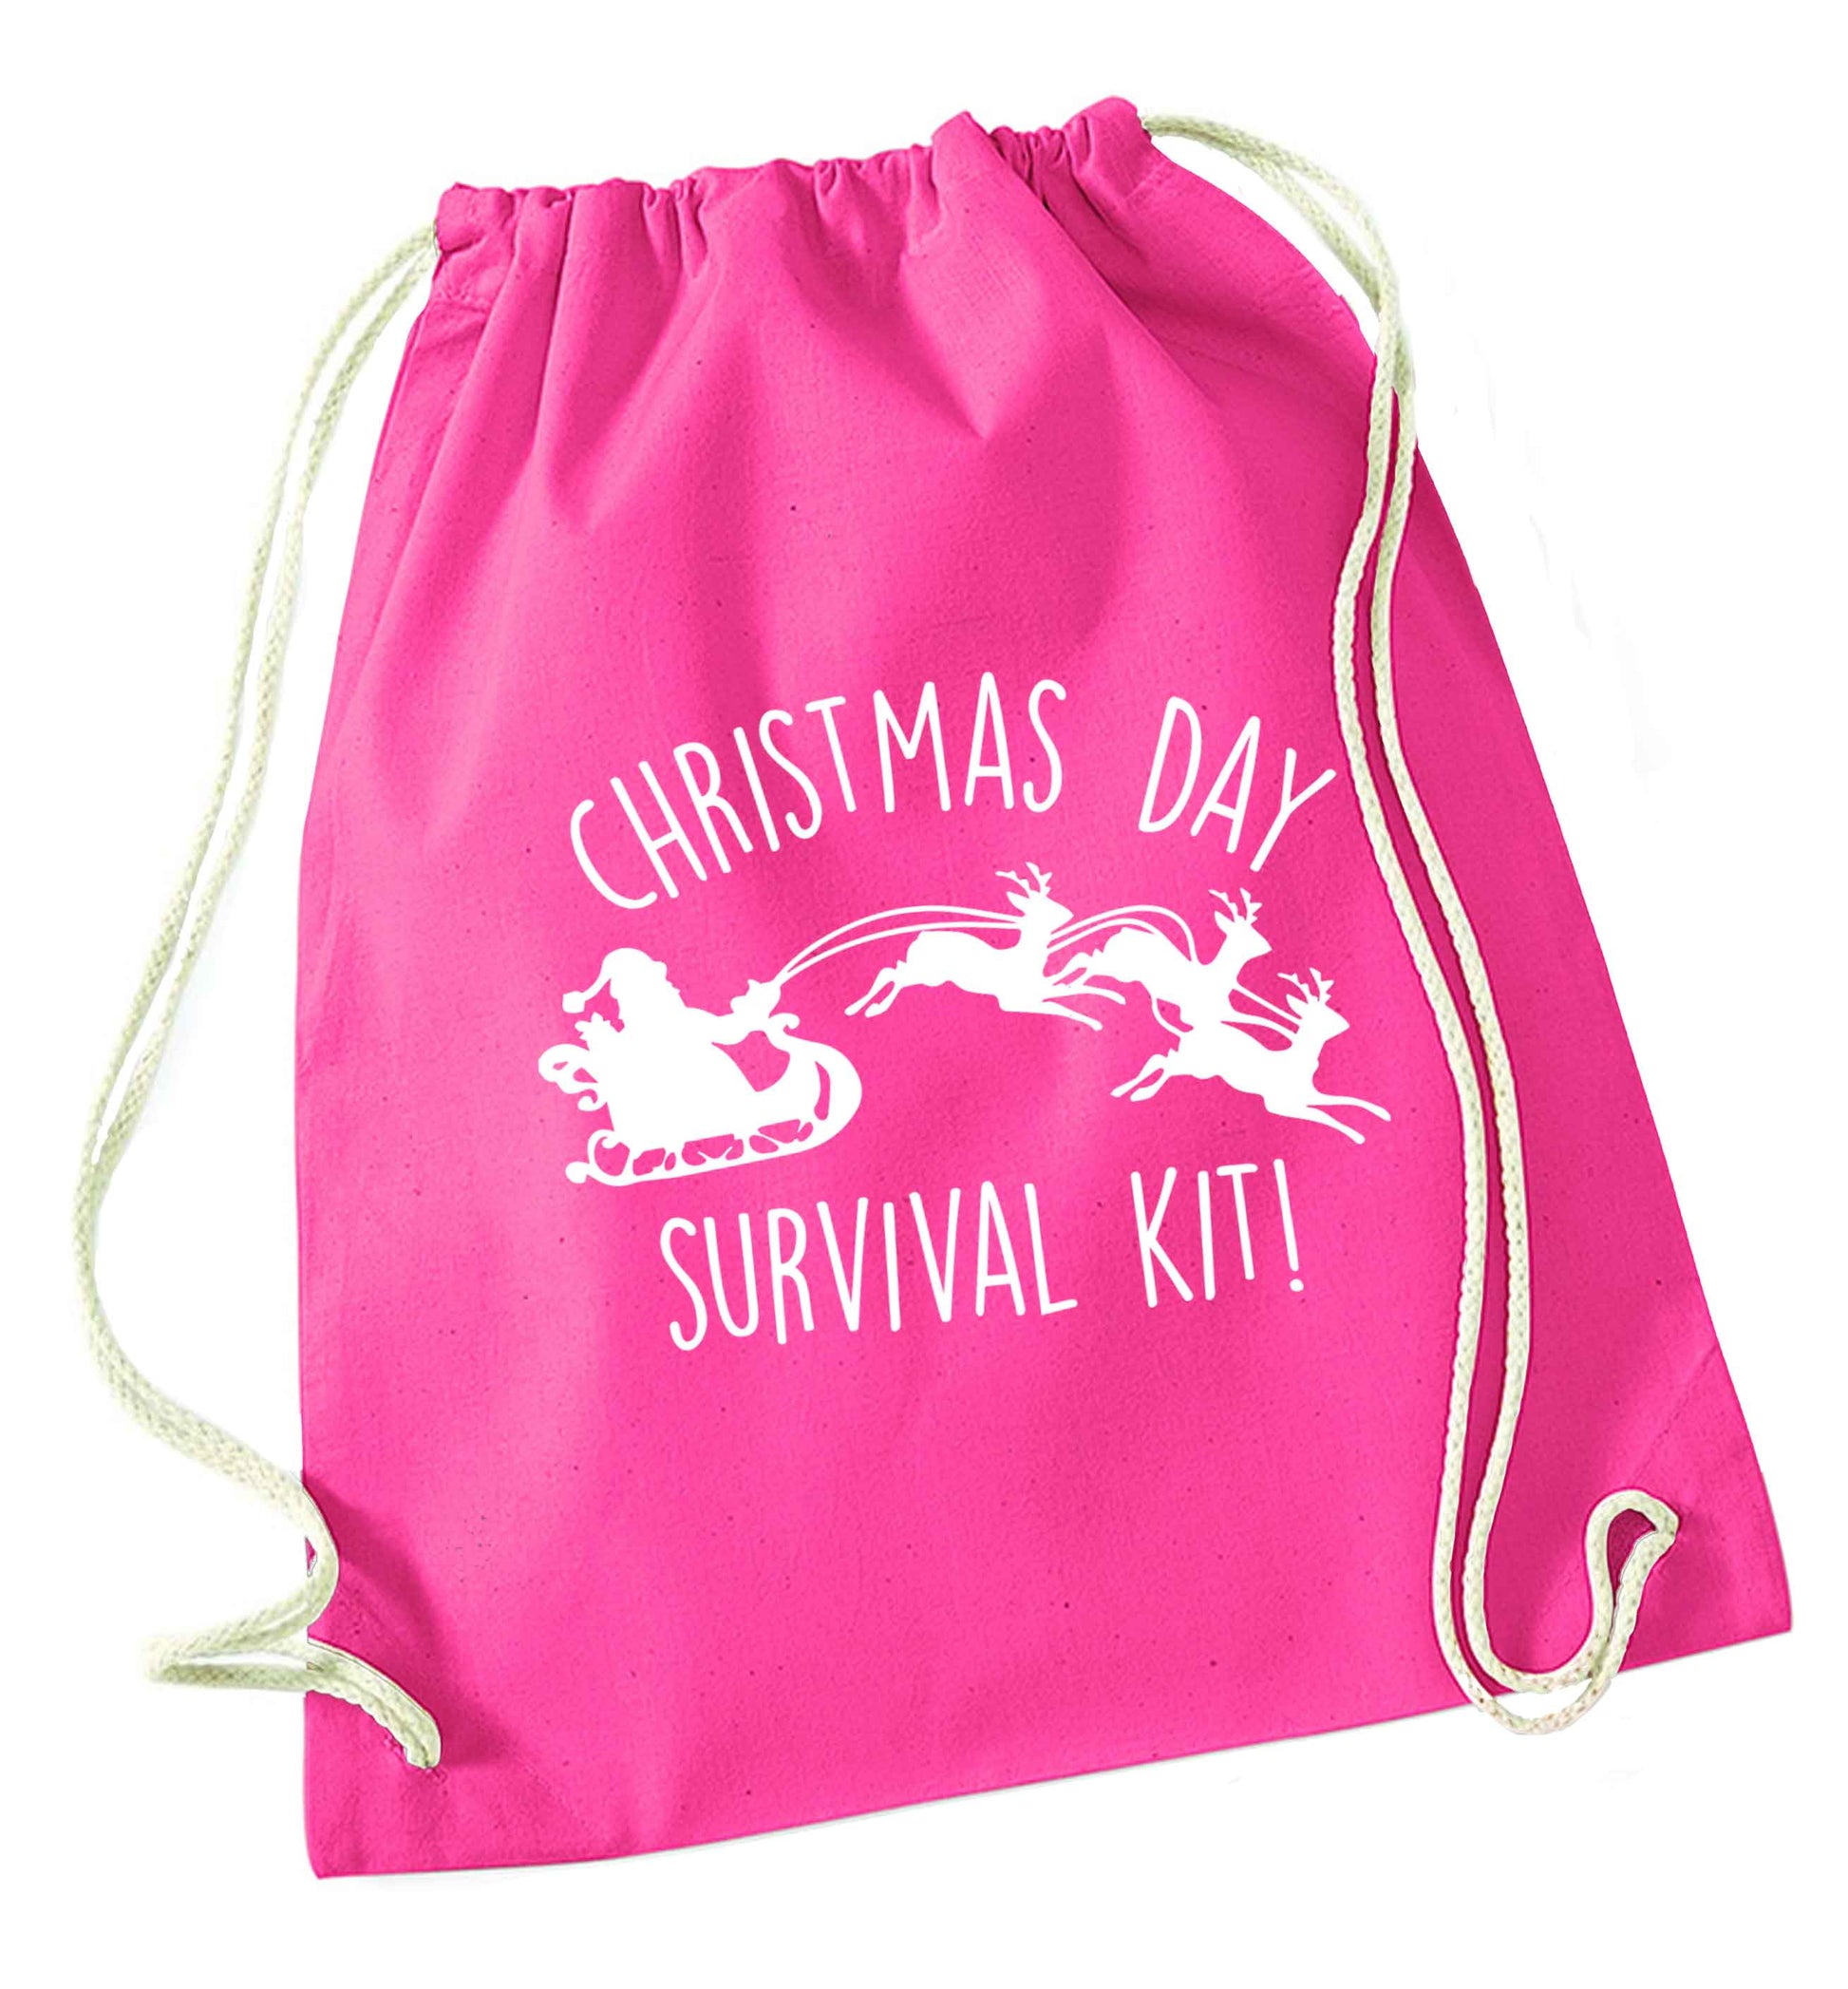 Christmas Day Survival Kitpink drawstring bag